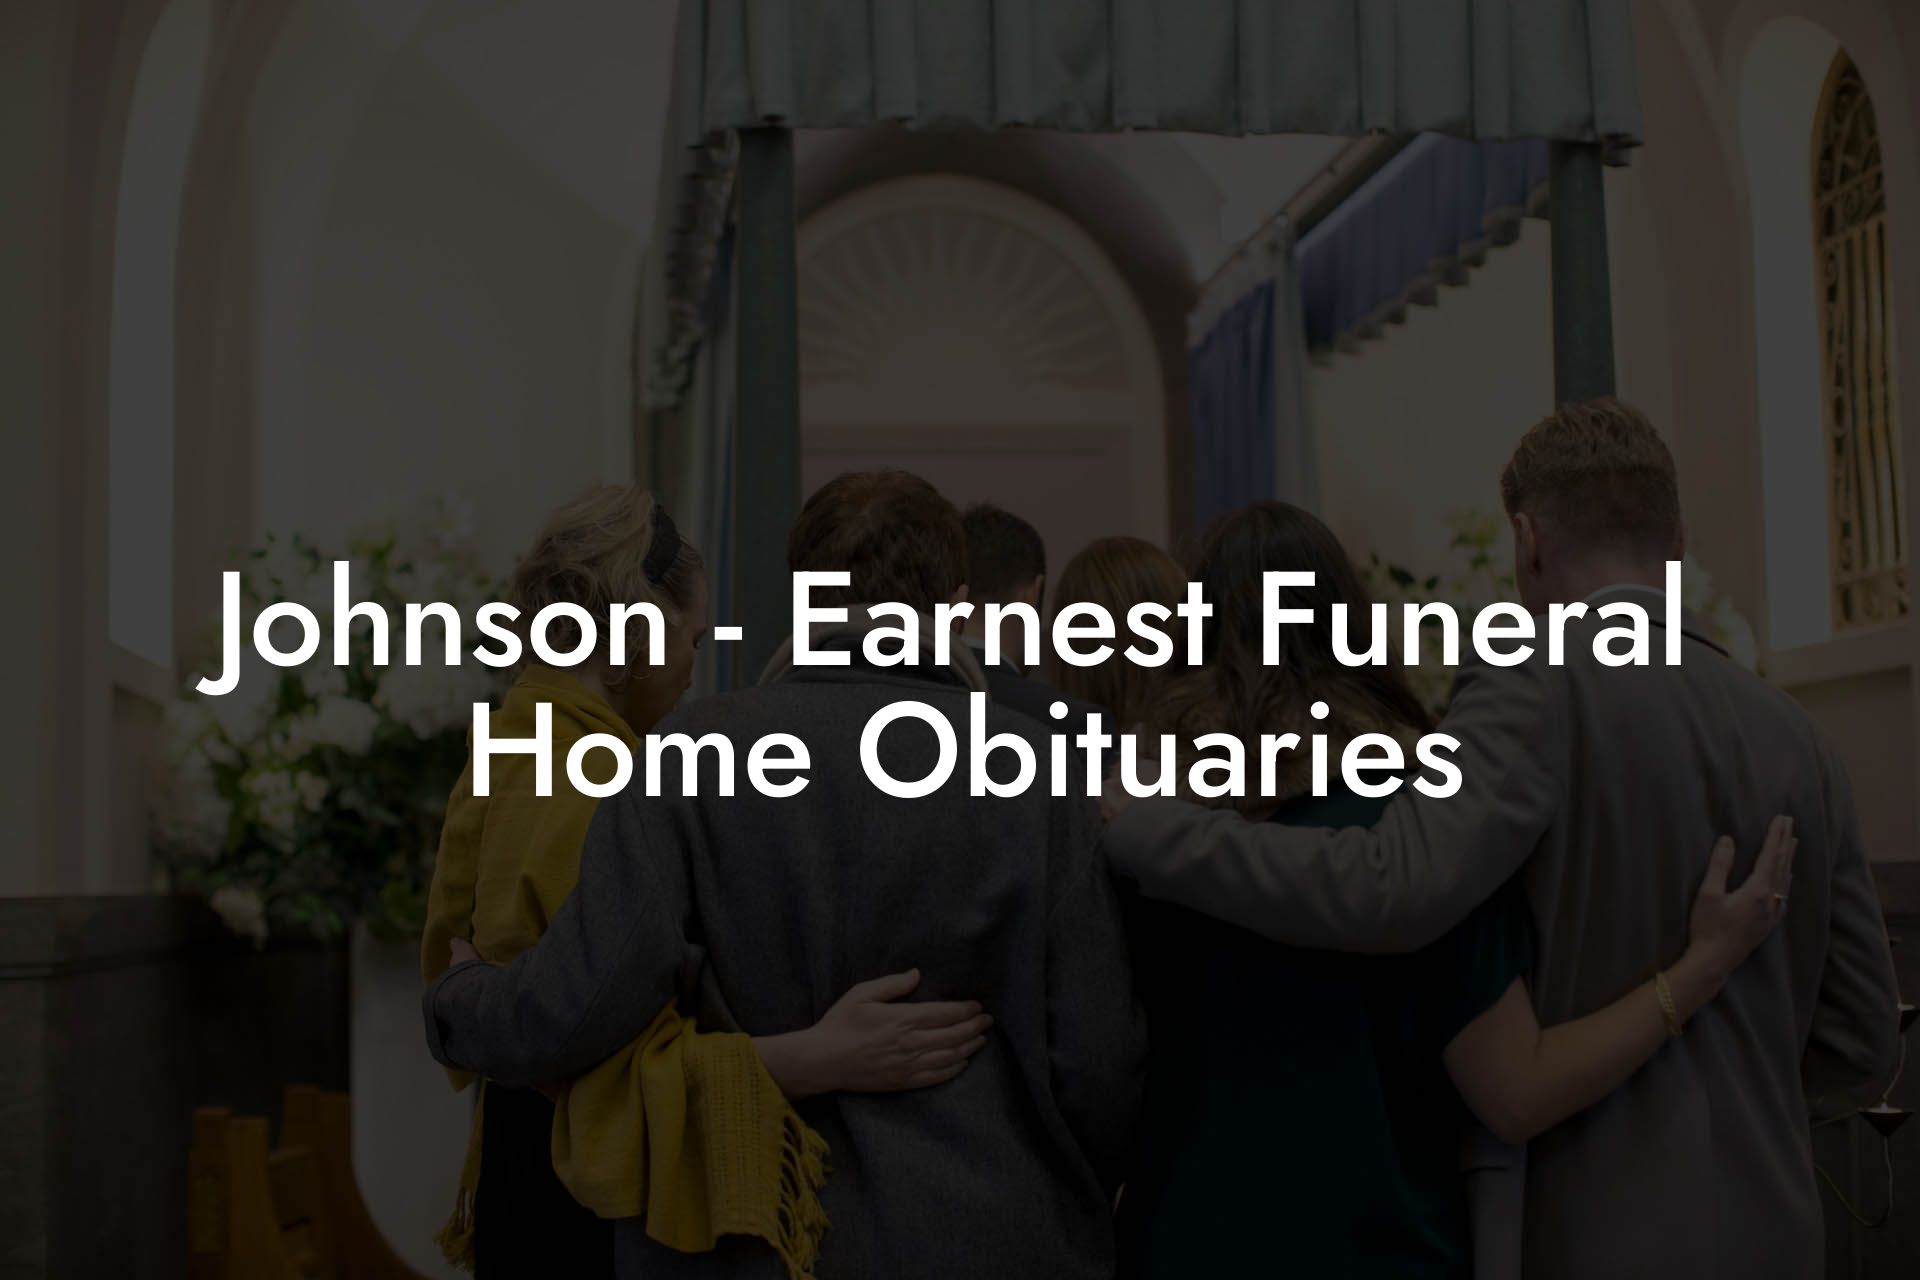 Johnson - Earnest Funeral Home Obituaries